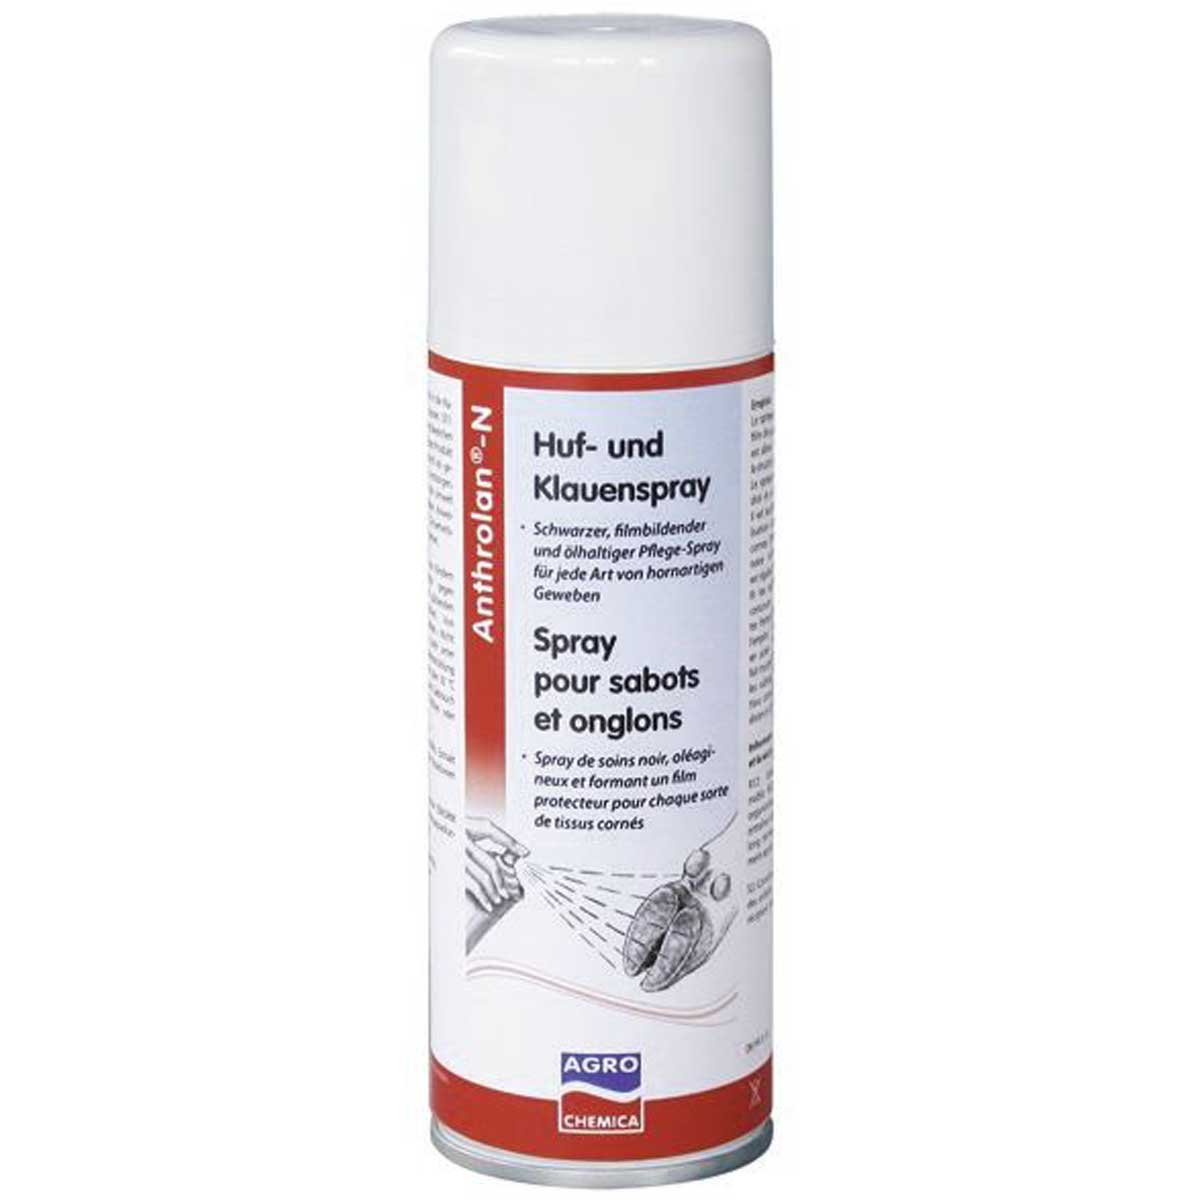 Anthrolan-N spray pentru copite și gheare 200 ml